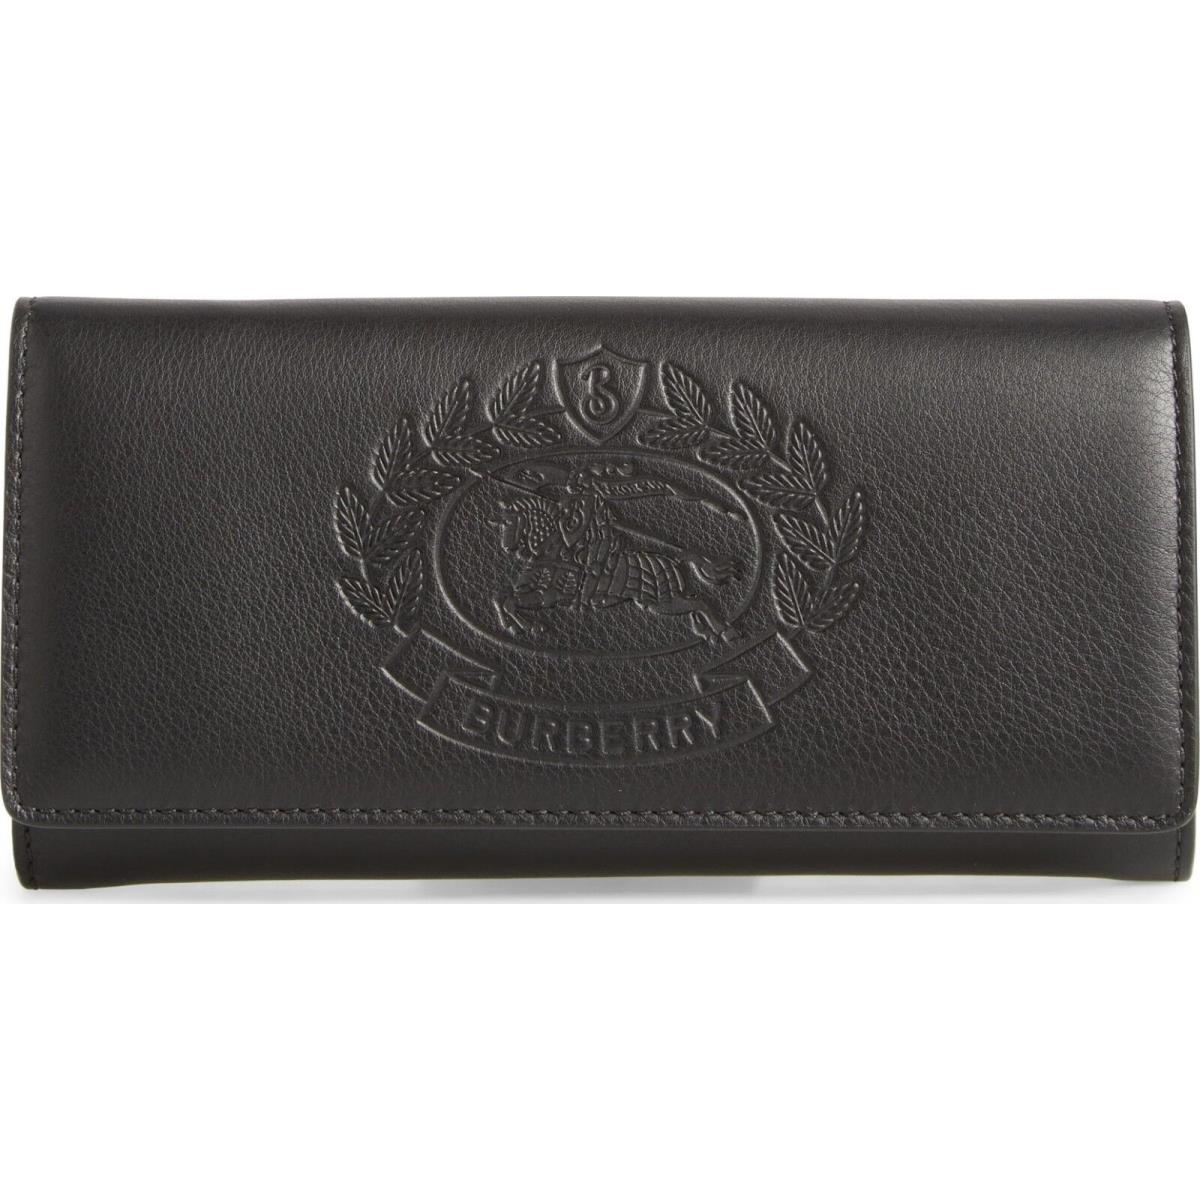 Burberry Crest Embossed Leather Clutch Black Wallet Italy Handbag